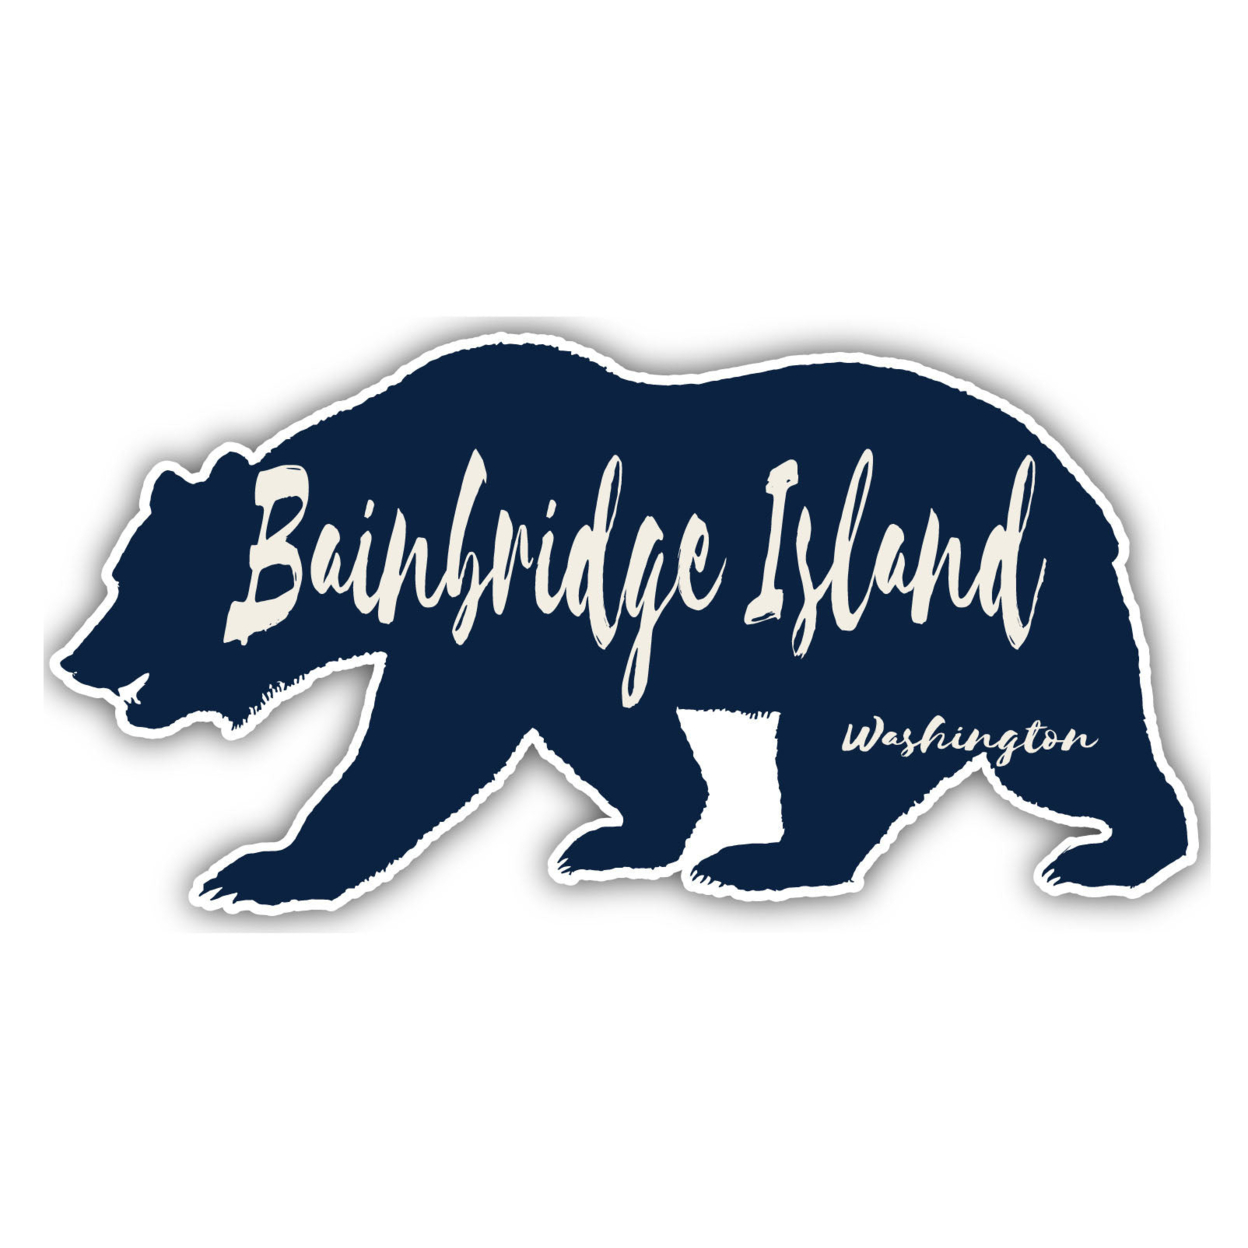 Bainbridge Island Washington Souvenir Decorative Stickers (Choose Theme And Size) - 4-Pack, 12-Inch, Adventures Awaits